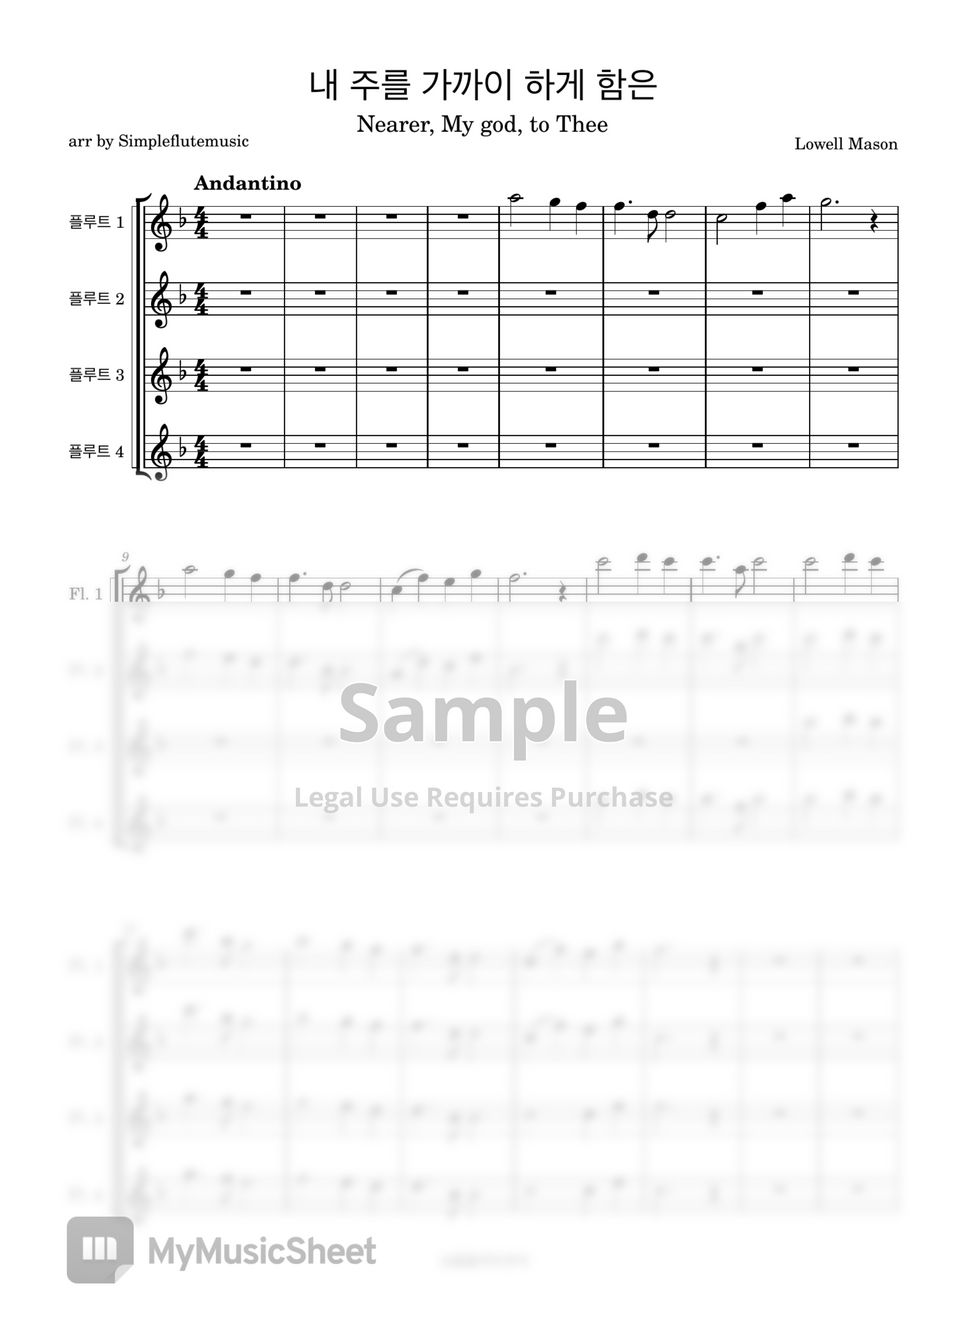 Lowell mason - 내 주를 가까이 함은 (4 Flutes/ MR) by 심플플루트뮤직